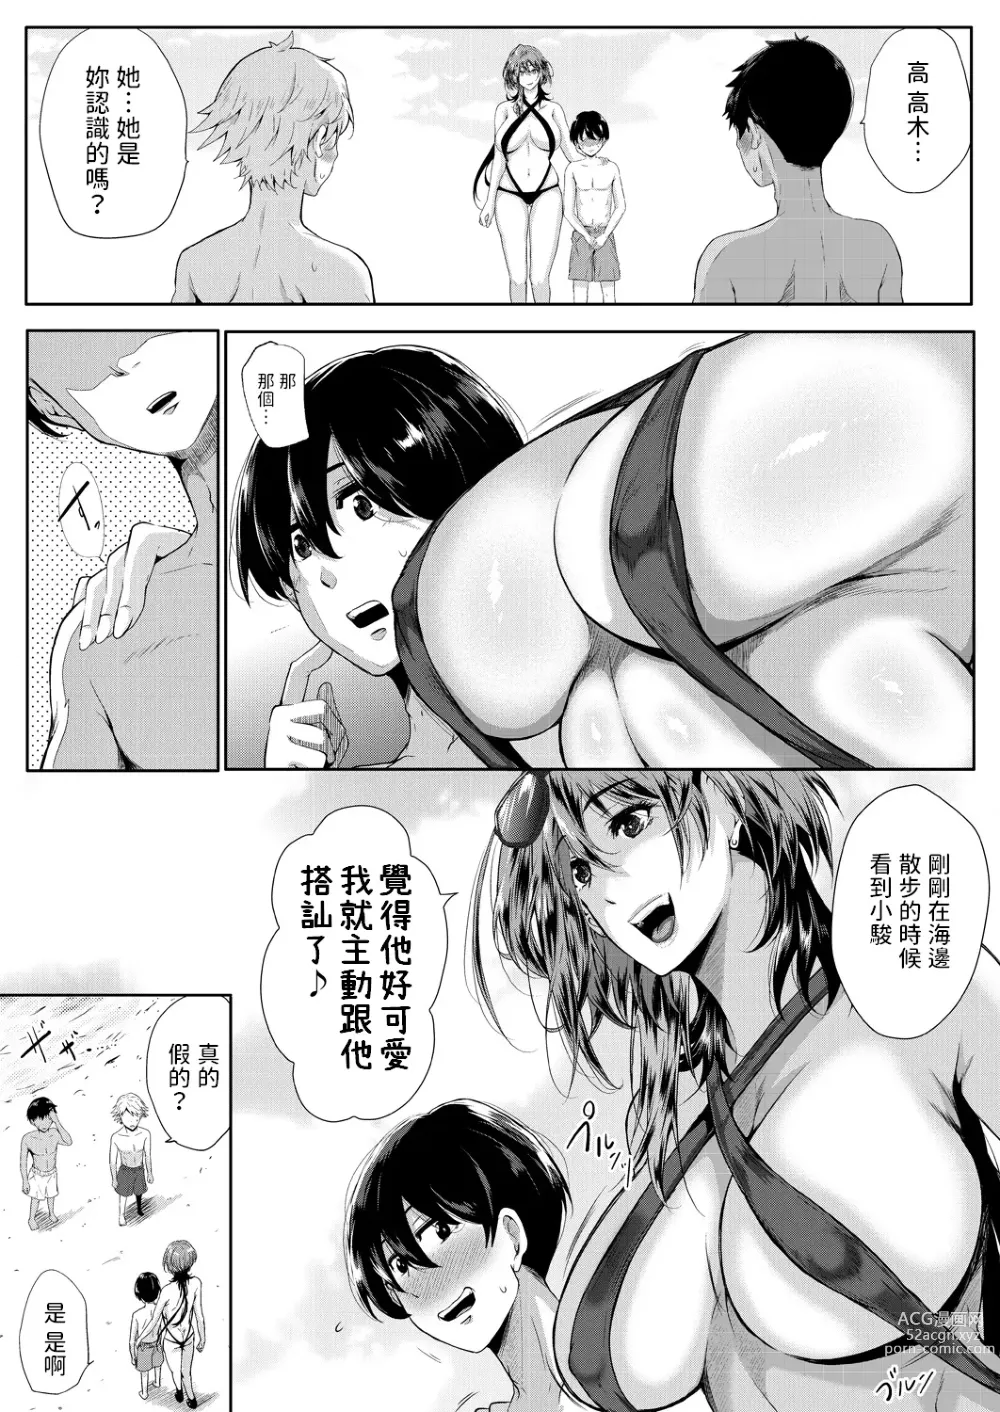 Page 11 of manga Strawberry Mermaid